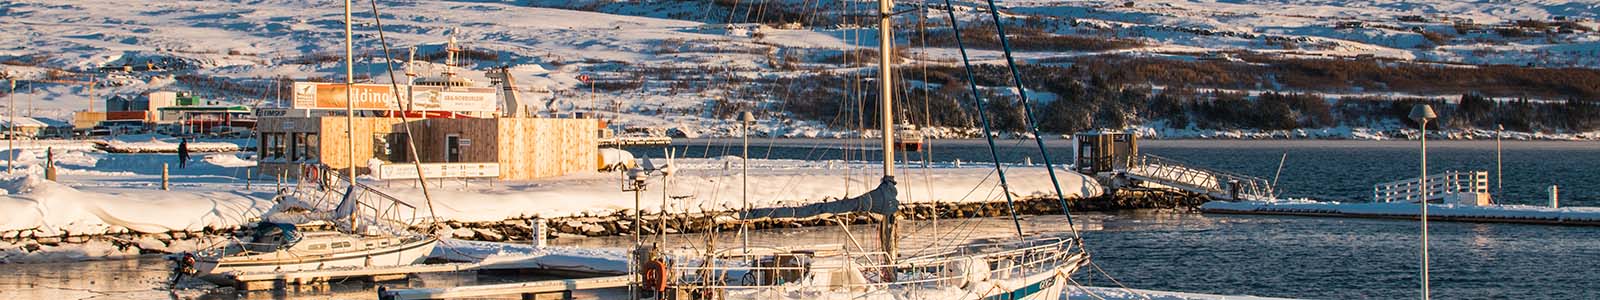 Wat kun je doen in Akureyri in de winter?